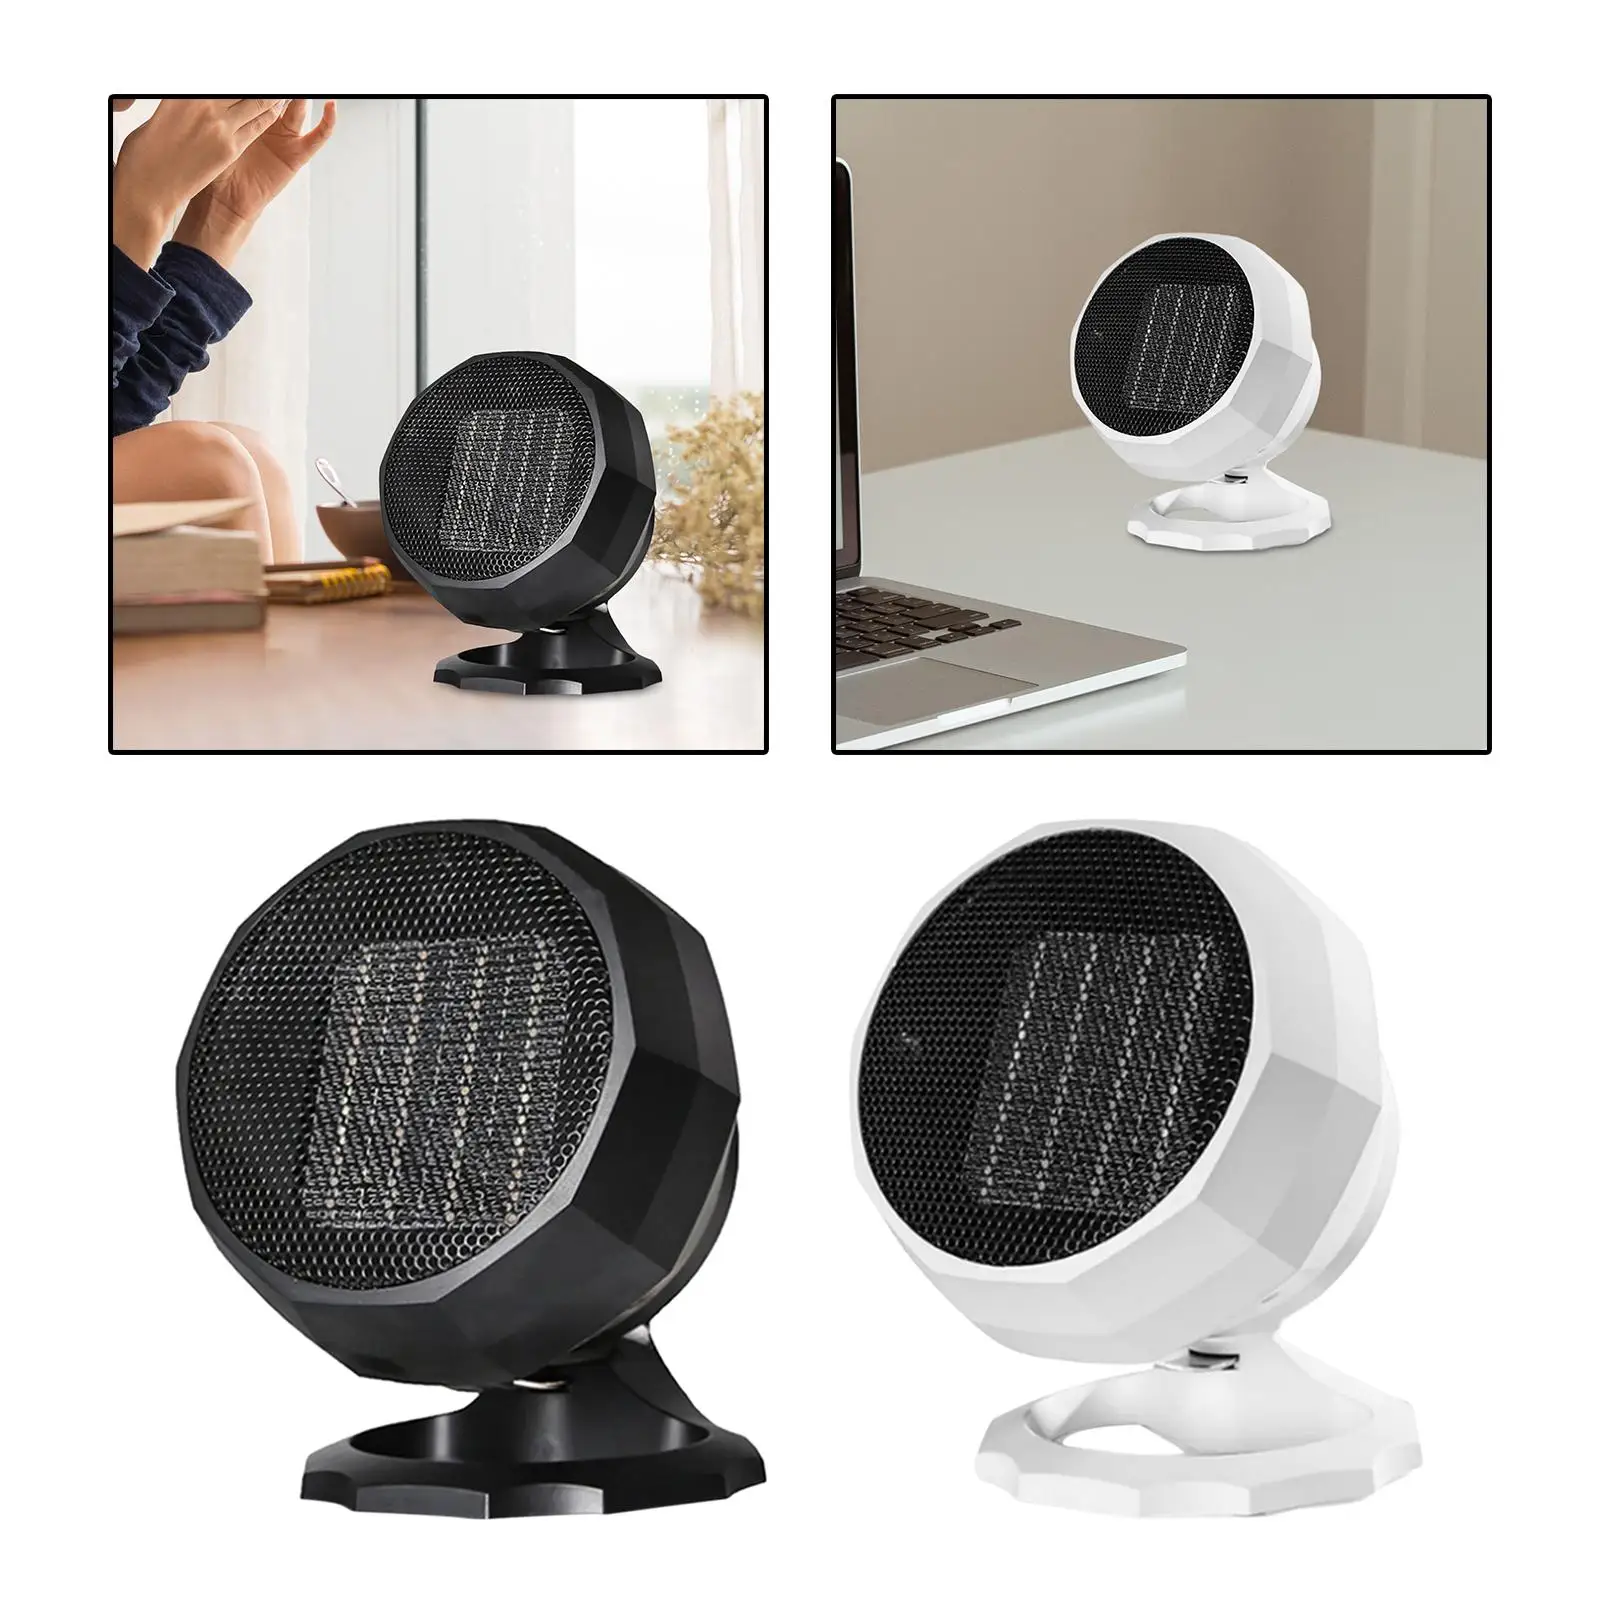 Desktop Electric Space Heater Desk Durable Versatile Portable Quick Heating Heating Fan for Bedroom Office Apartment EU Adapter